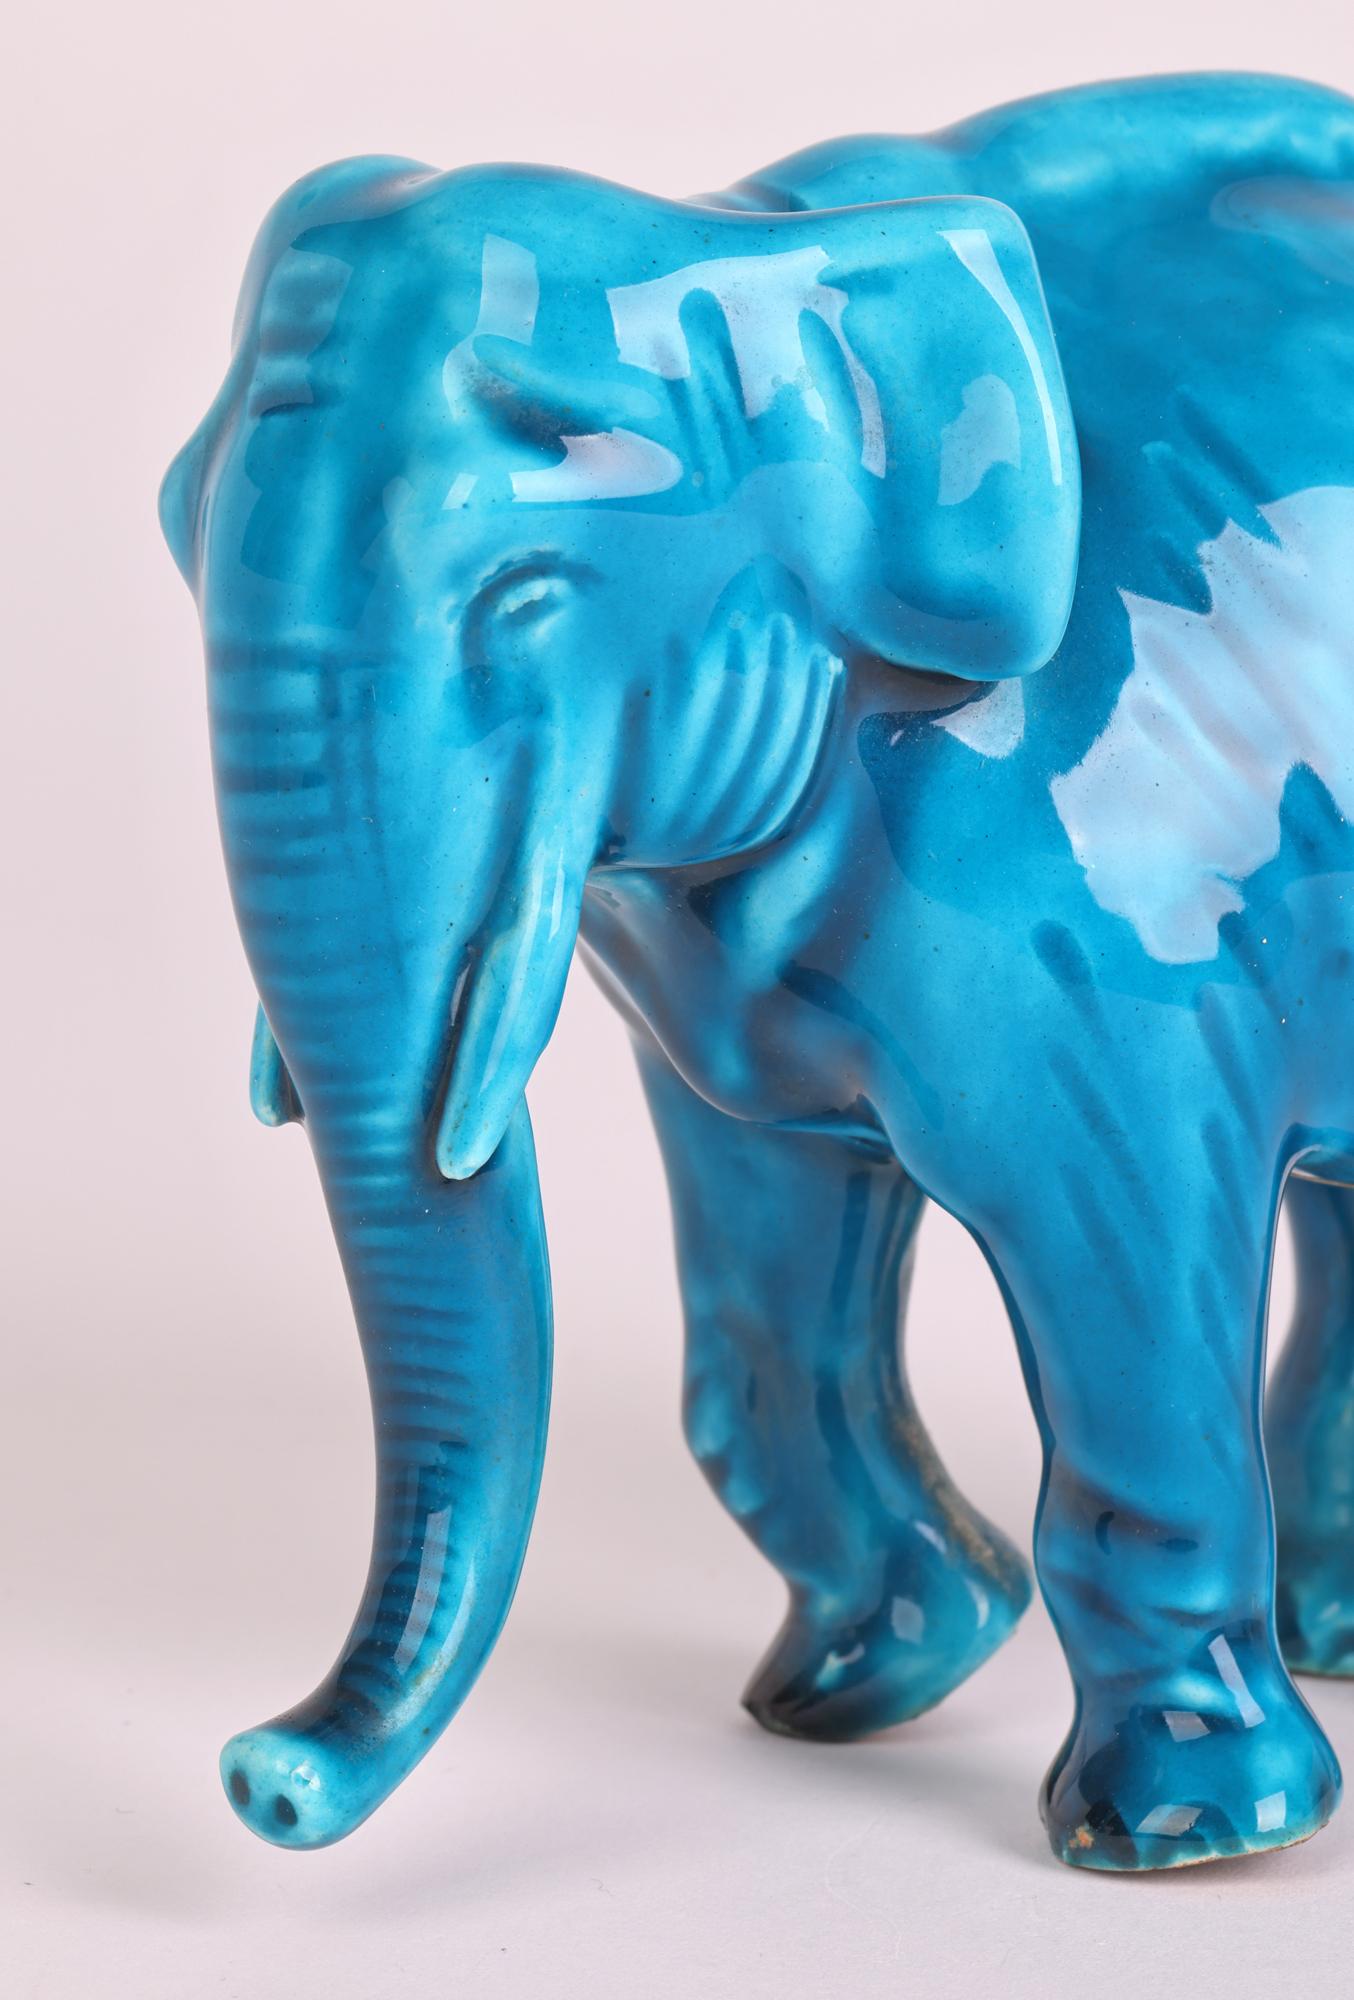 Paul Milet Sevres Turquoise Glazed Ceramic Elephant Figure    For Sale 8